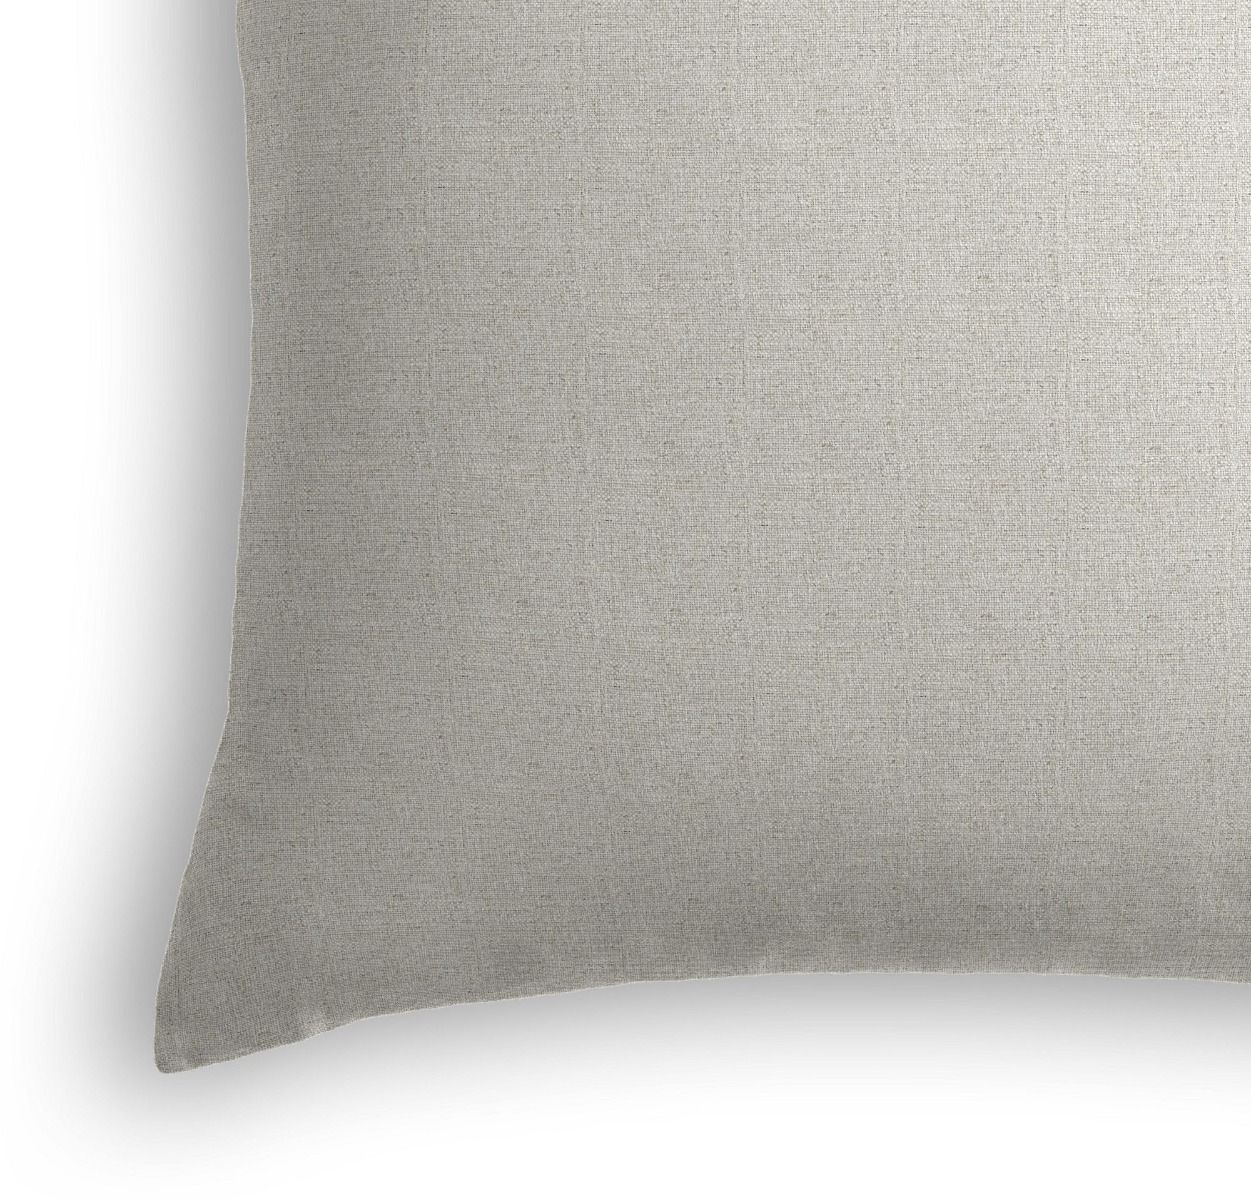 Classic Linen Pillow, Sandy Tan, 22" x 22" - Image 1